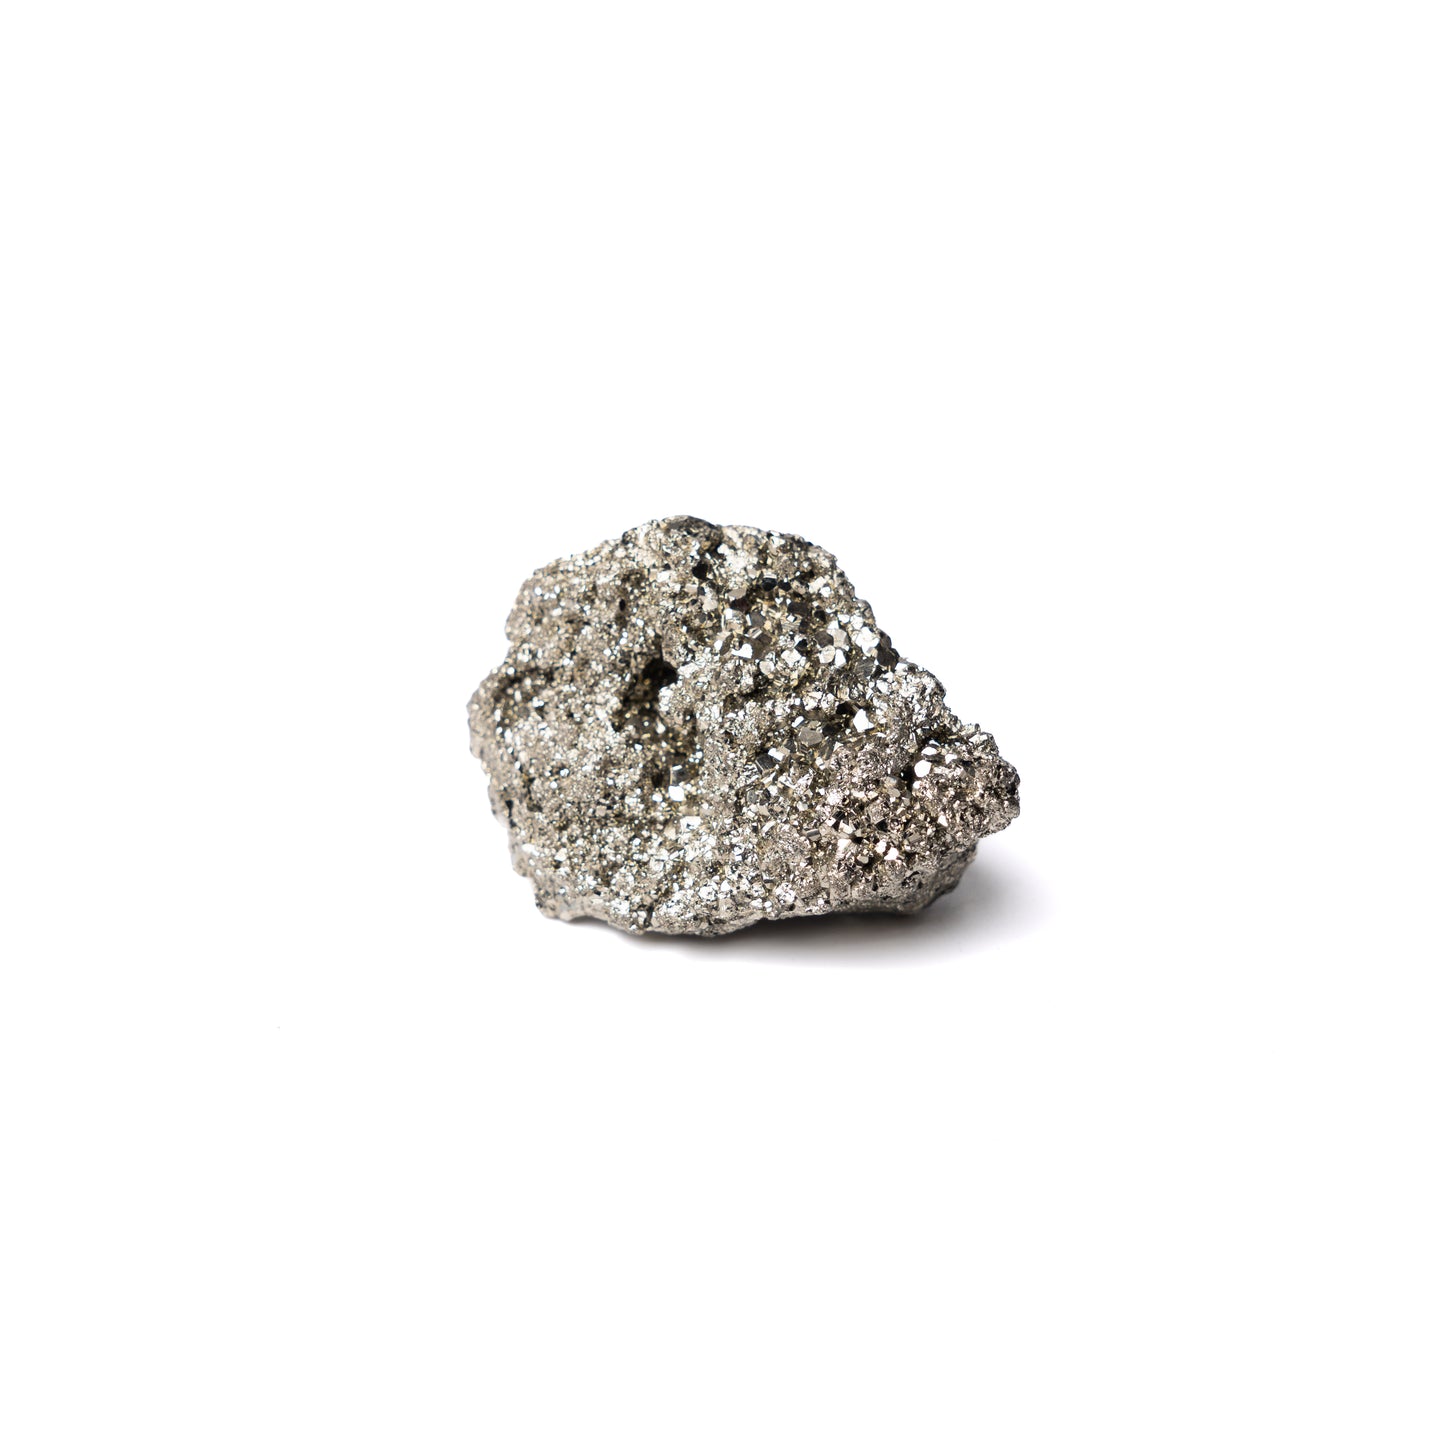 Single Raw Pyrite